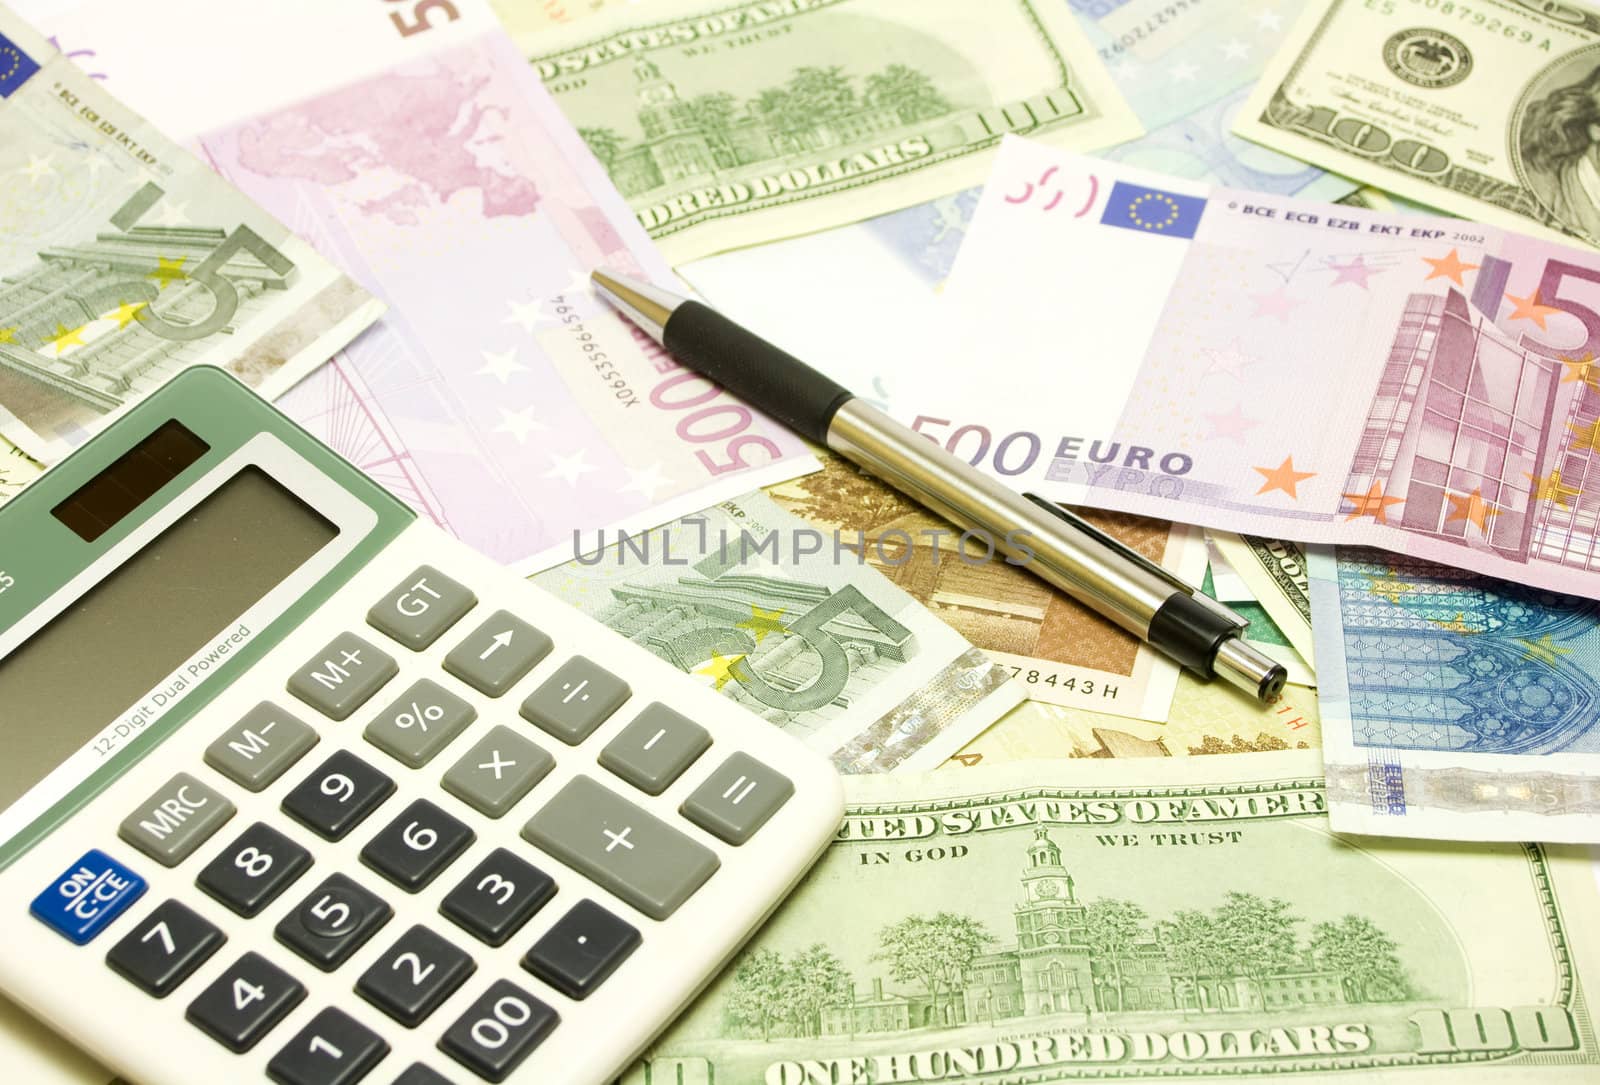 Dollar, euro, lat banknotes, calculator and pen